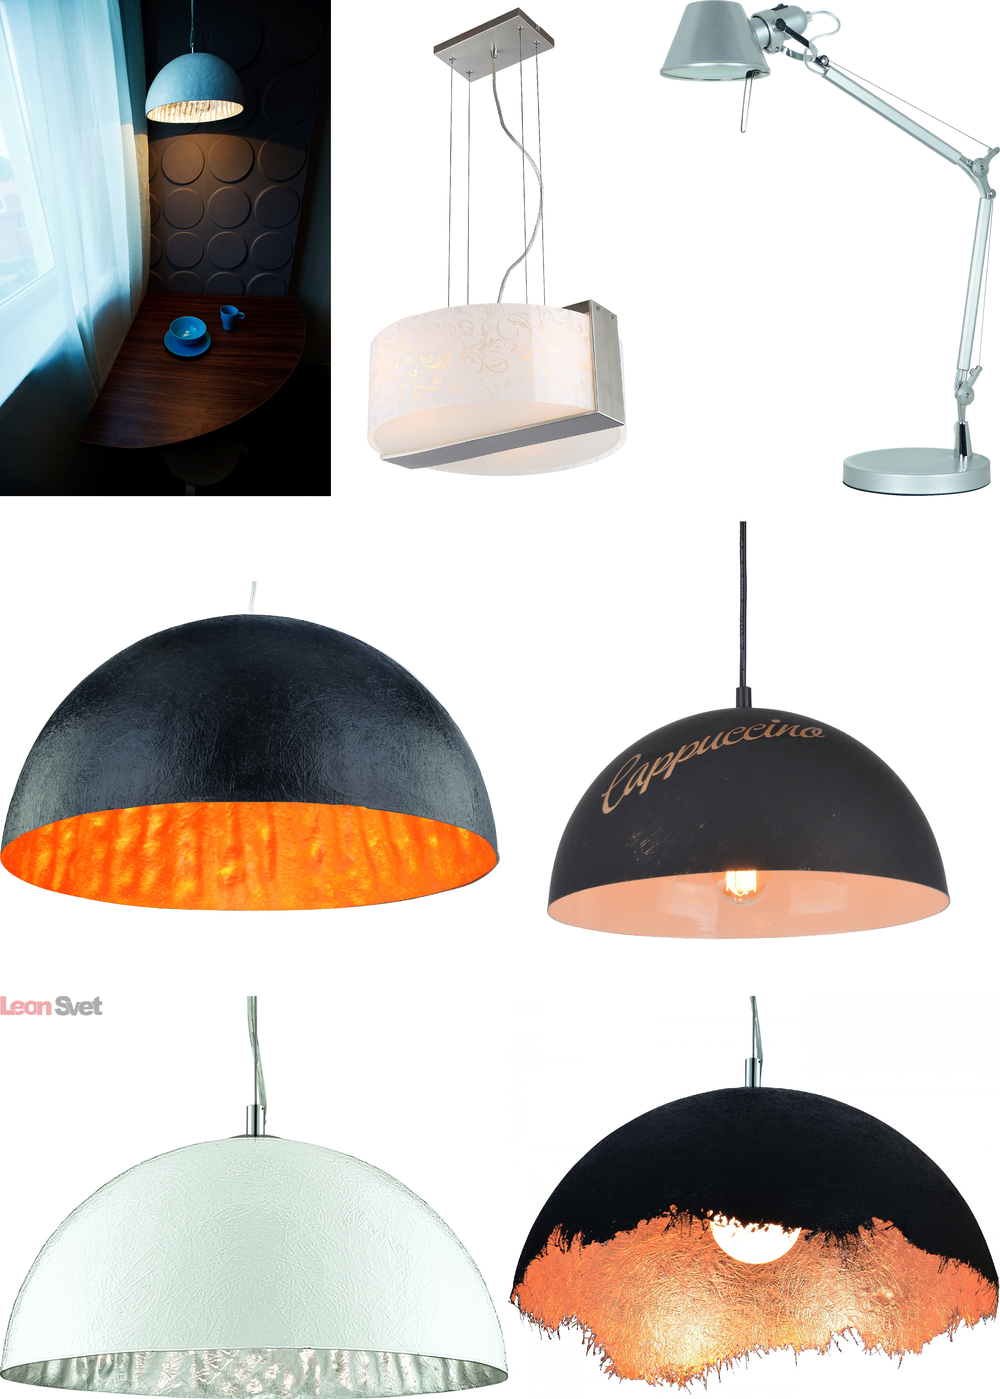 « подвесные». Arte Lamp серия Dome артикул A8149SP-1SI